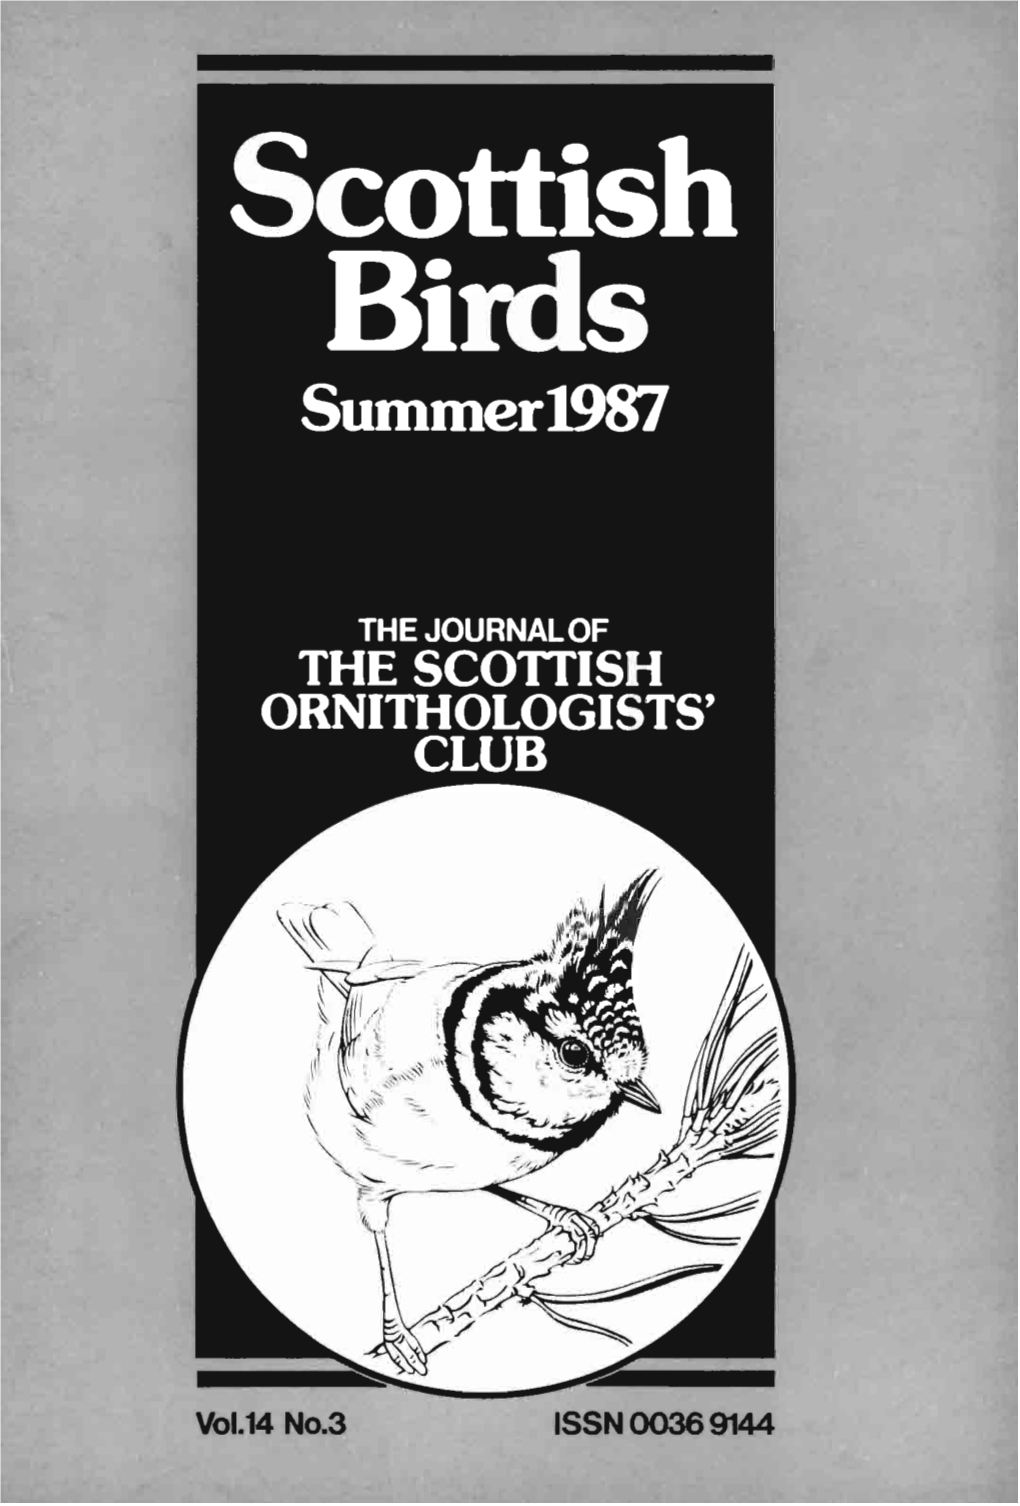 Voi.14 No.3 ISSN 0036 9144 Scottish Birds the Journal of the Scottish Ornithologists' Club